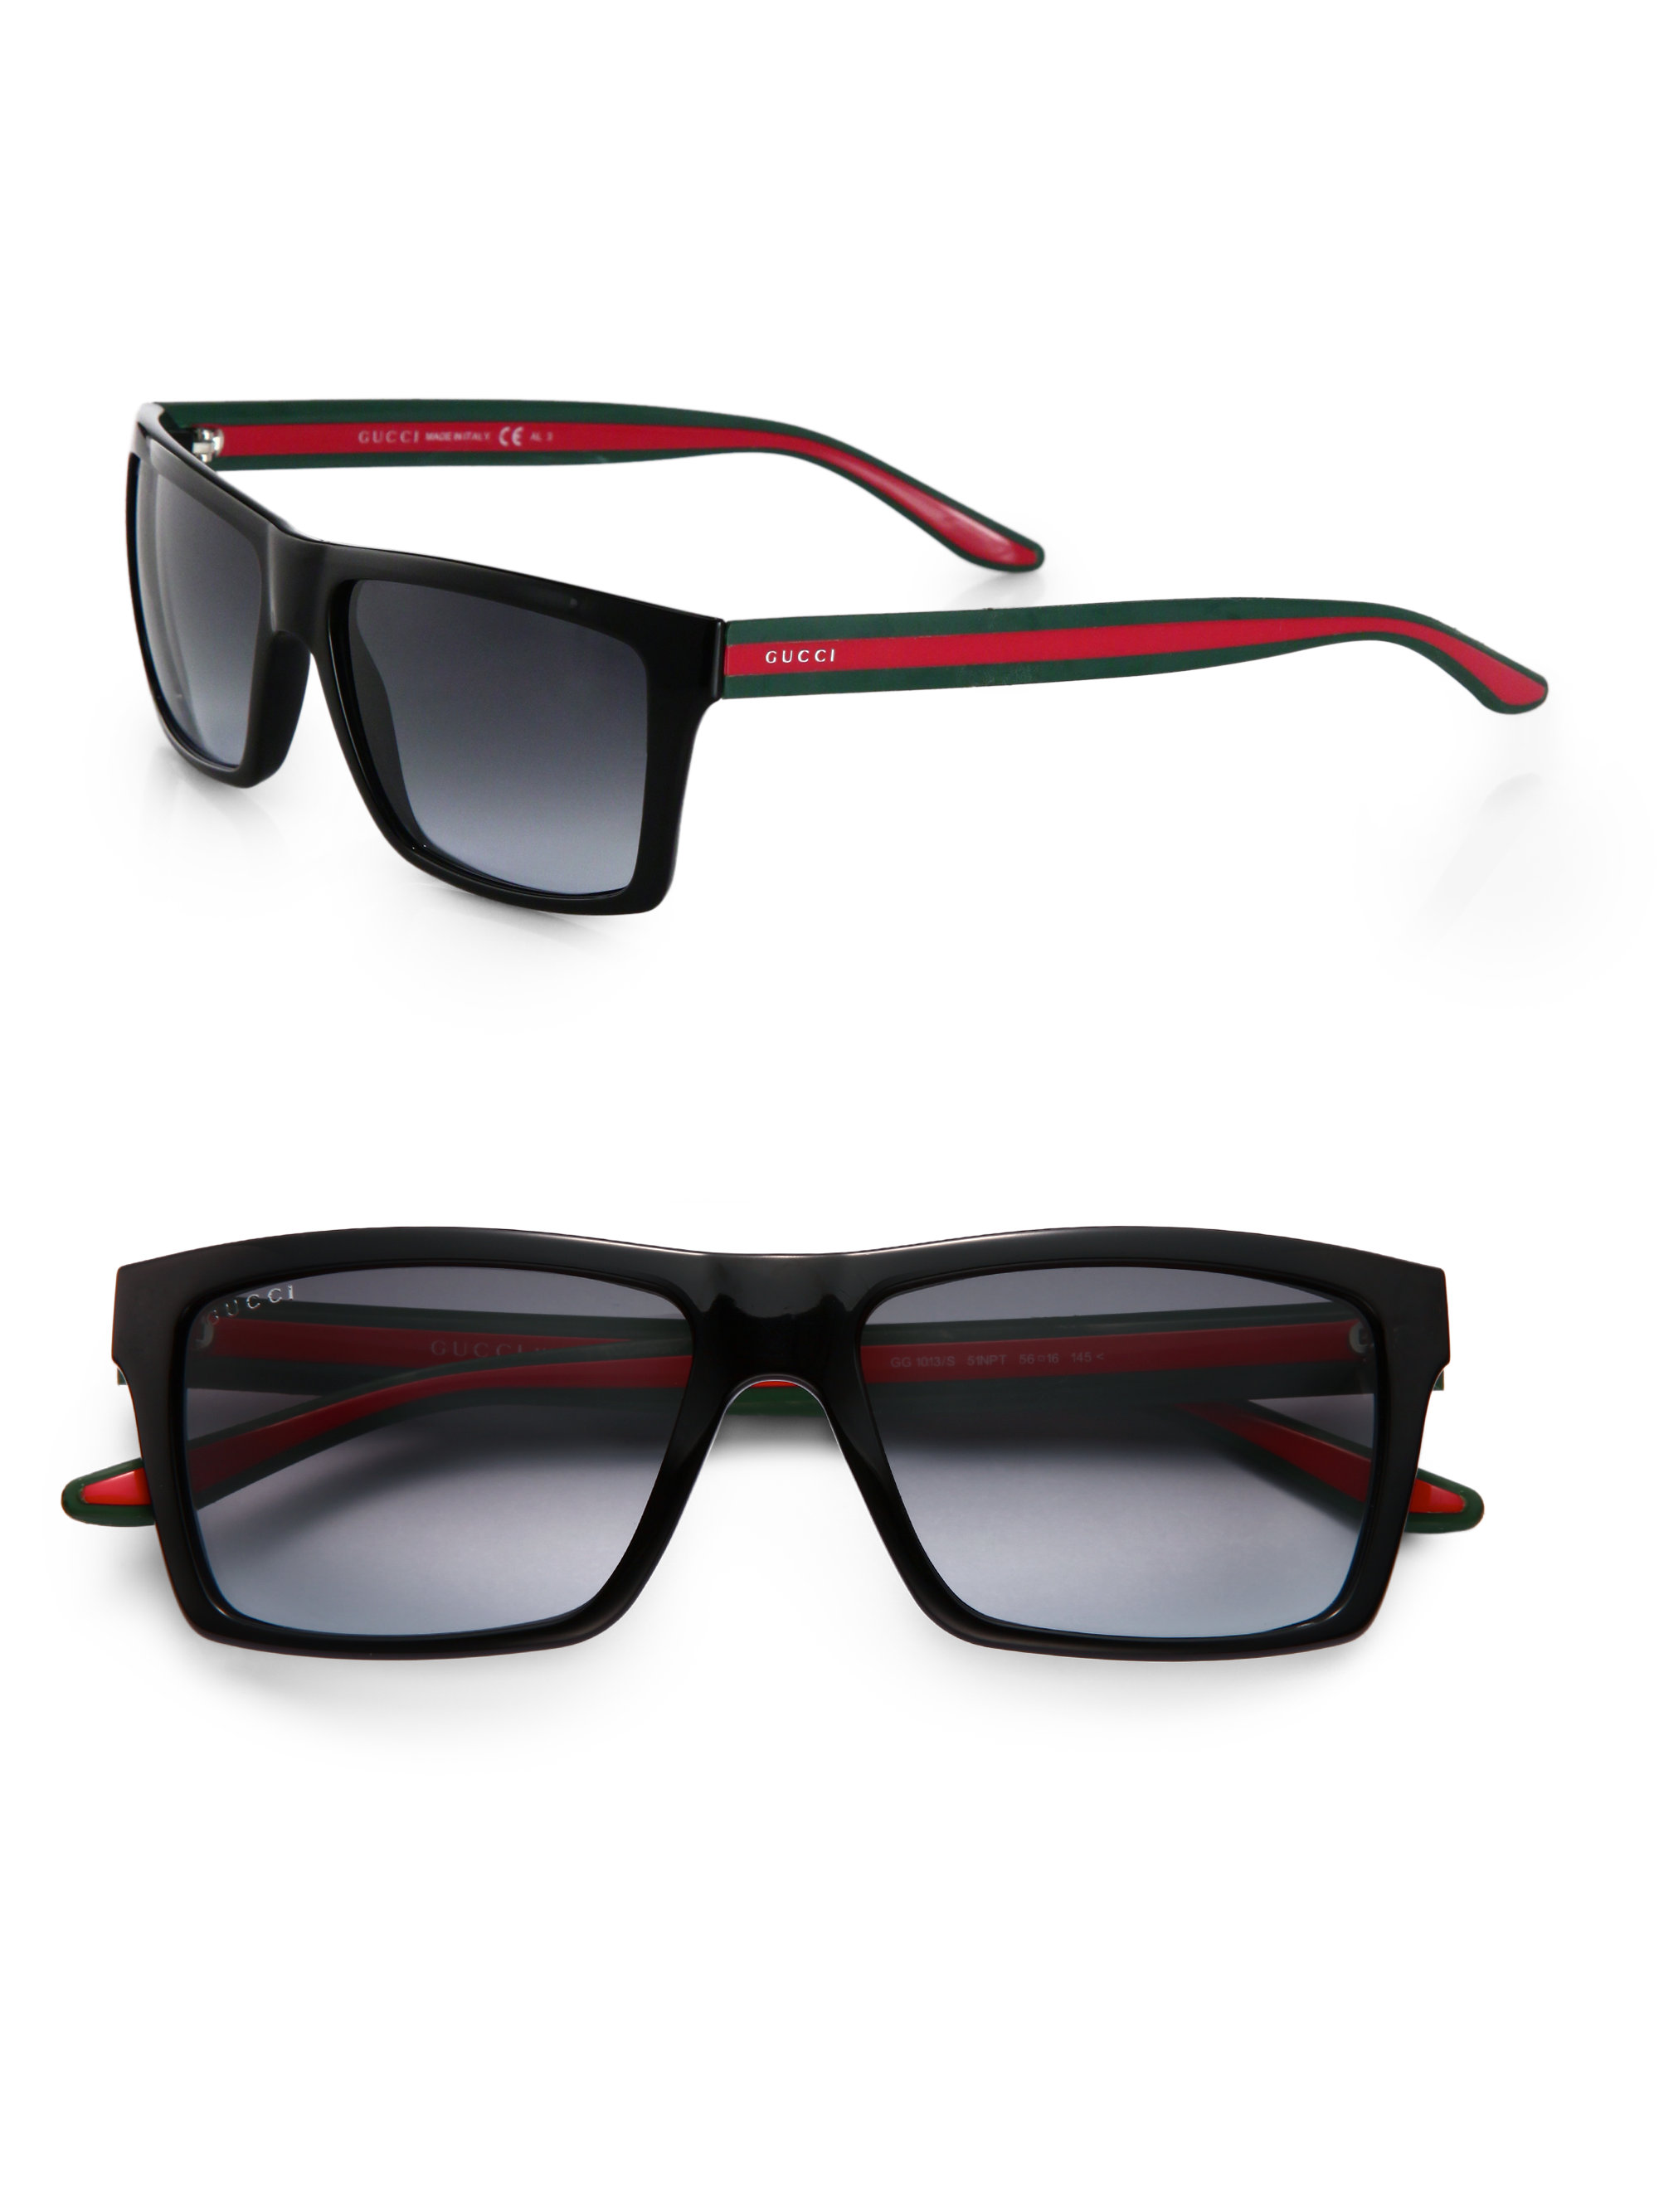 Lyst - Gucci Web Stripe Sunglasses in Black